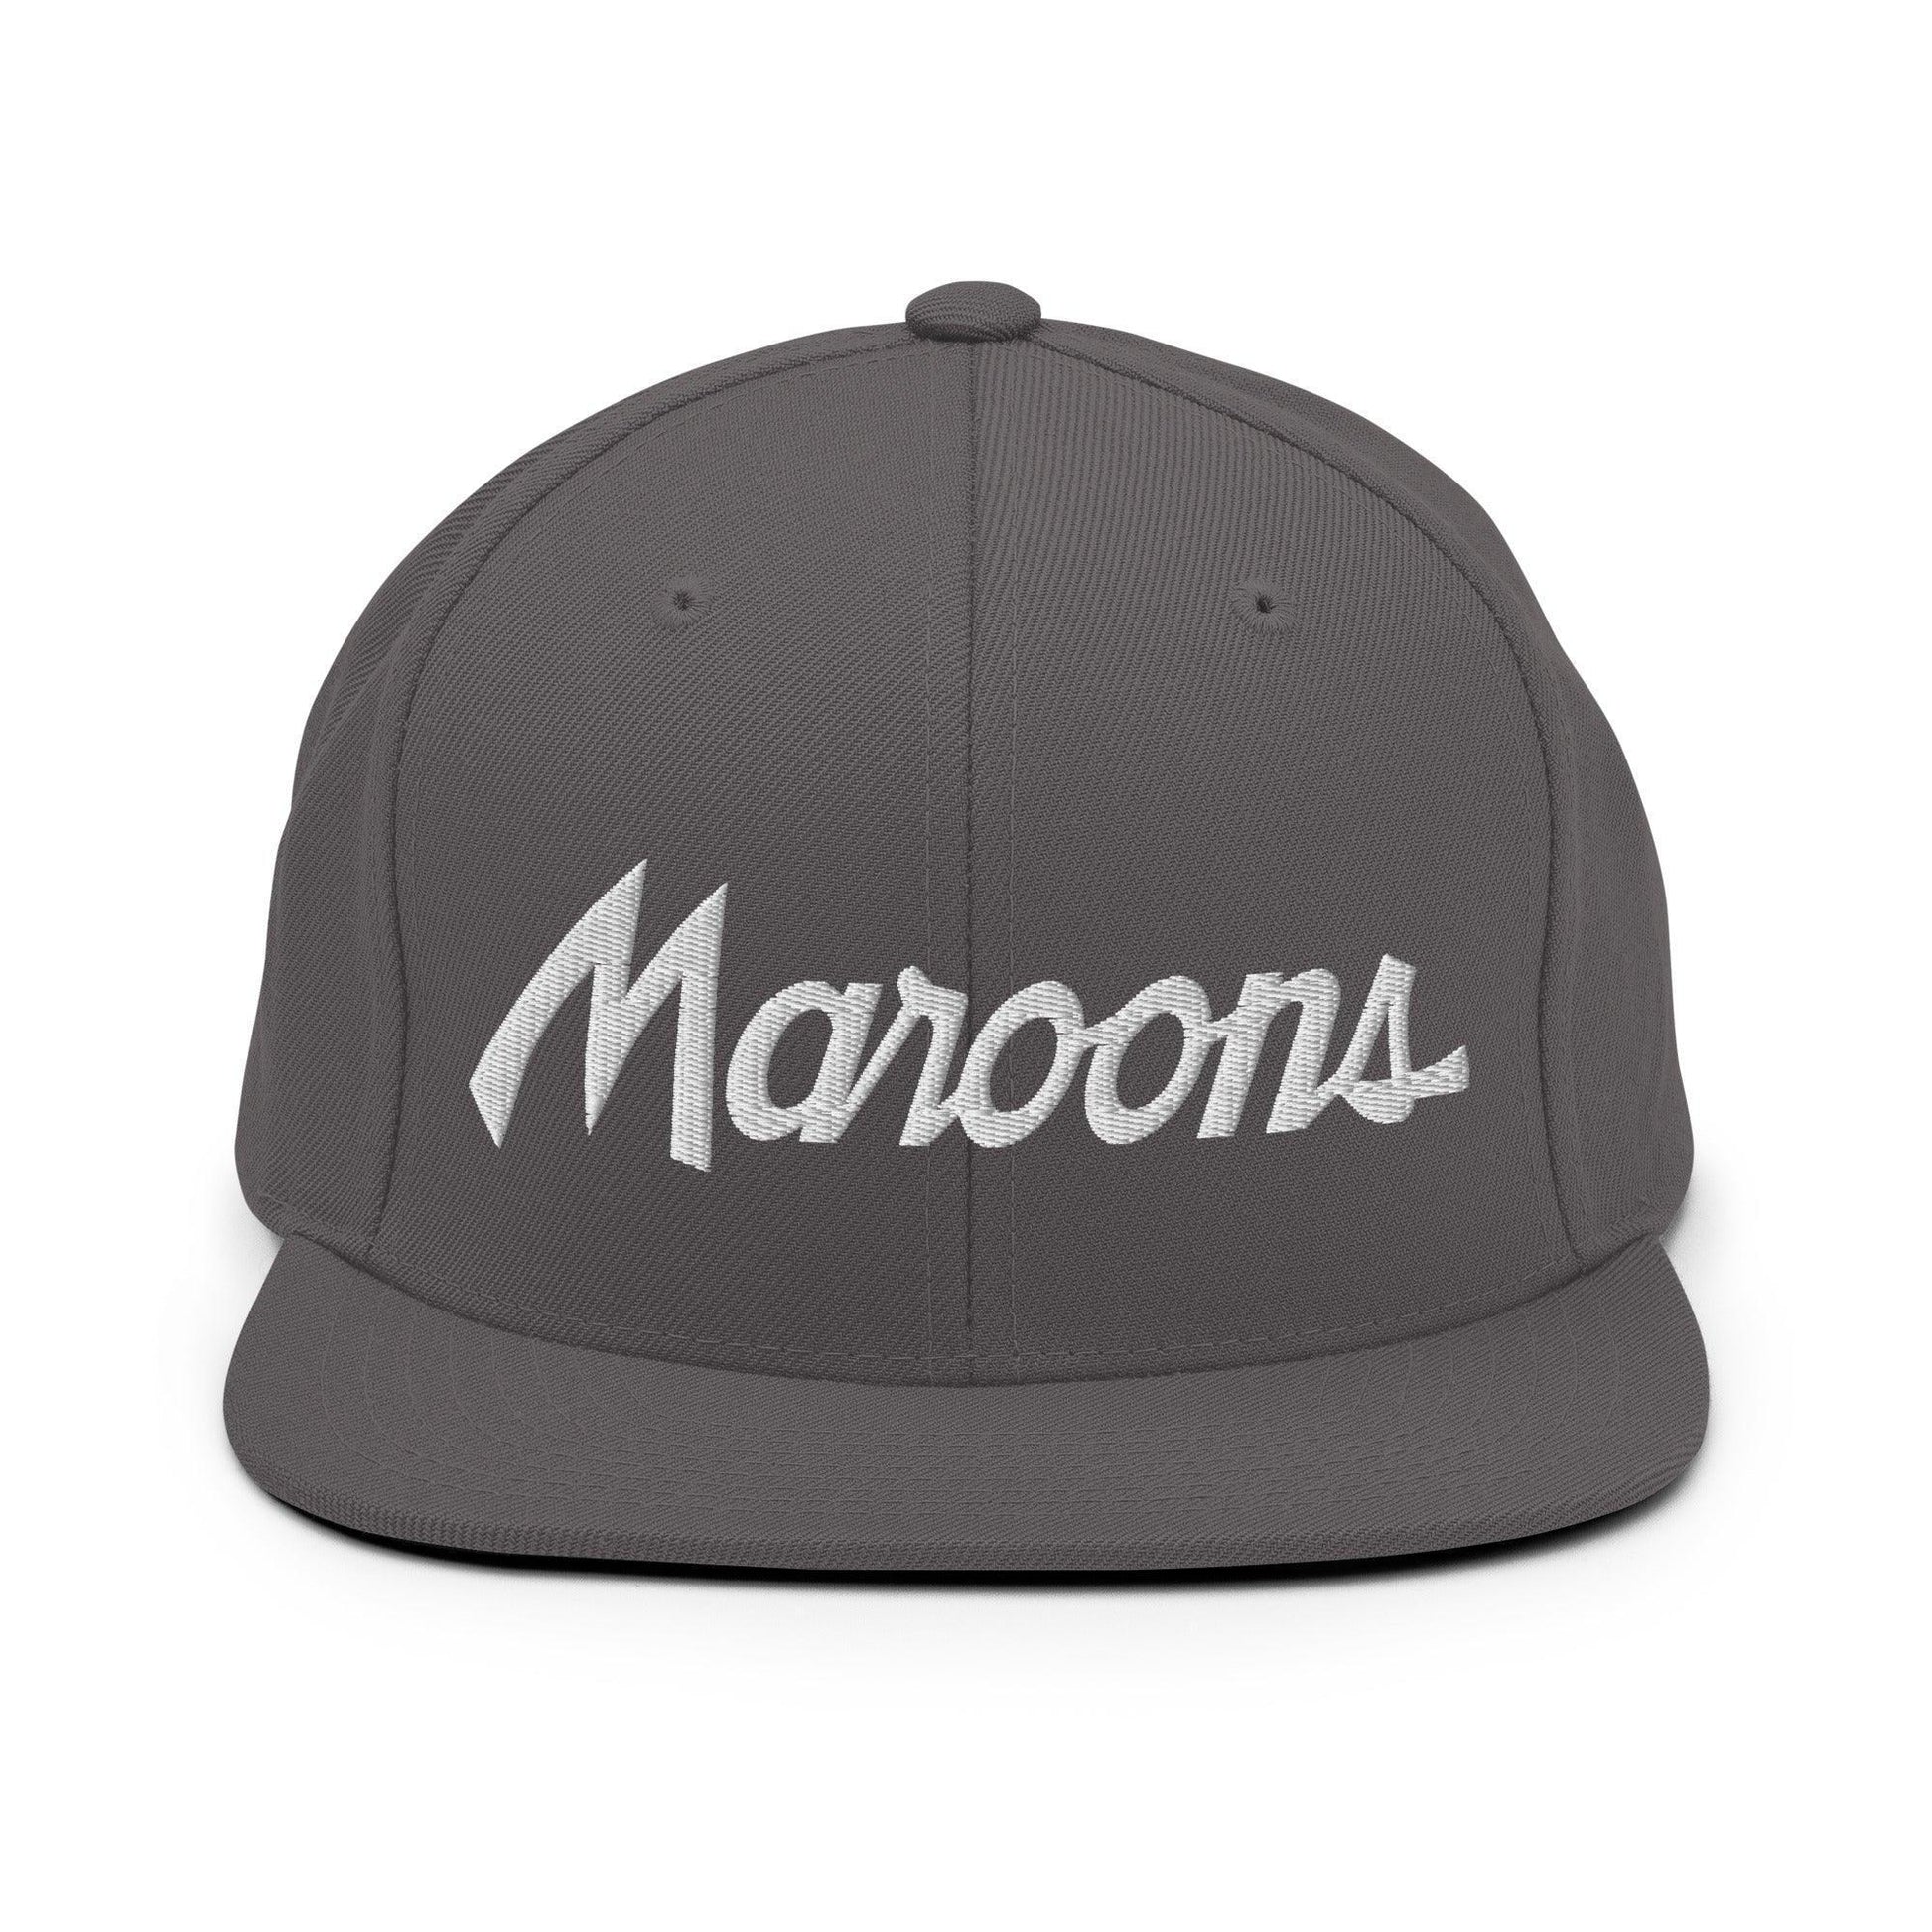 Maroons School Mascot Script Snapback Hat Dark Grey